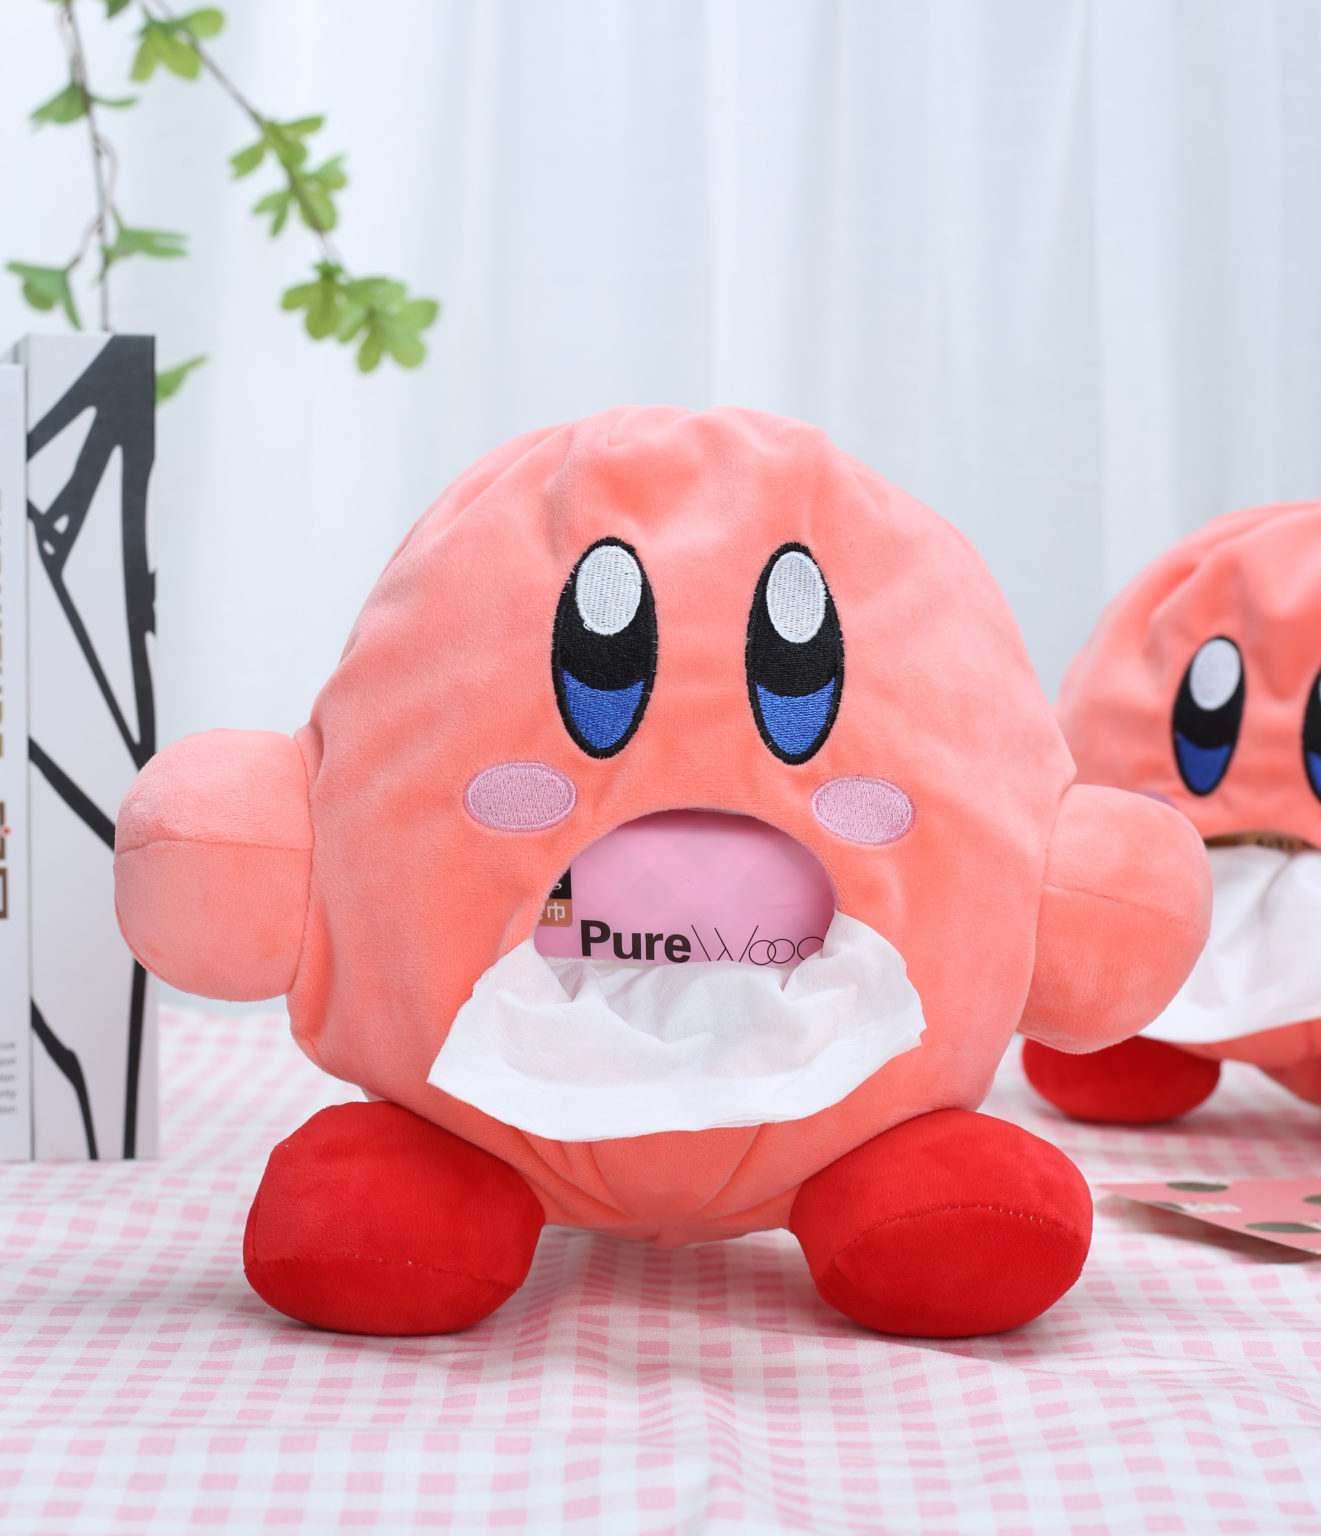 https://regisbox.com/wp-content/uploads/2022/04/Kirby-Tissue-Holder-Cute-Kirby-Tissue-Plush-Cover-Kawaii-Tissue-Box-Cover-Pink-Tissue-Case-Kirby-Plushie-3-1321x1536.jpg